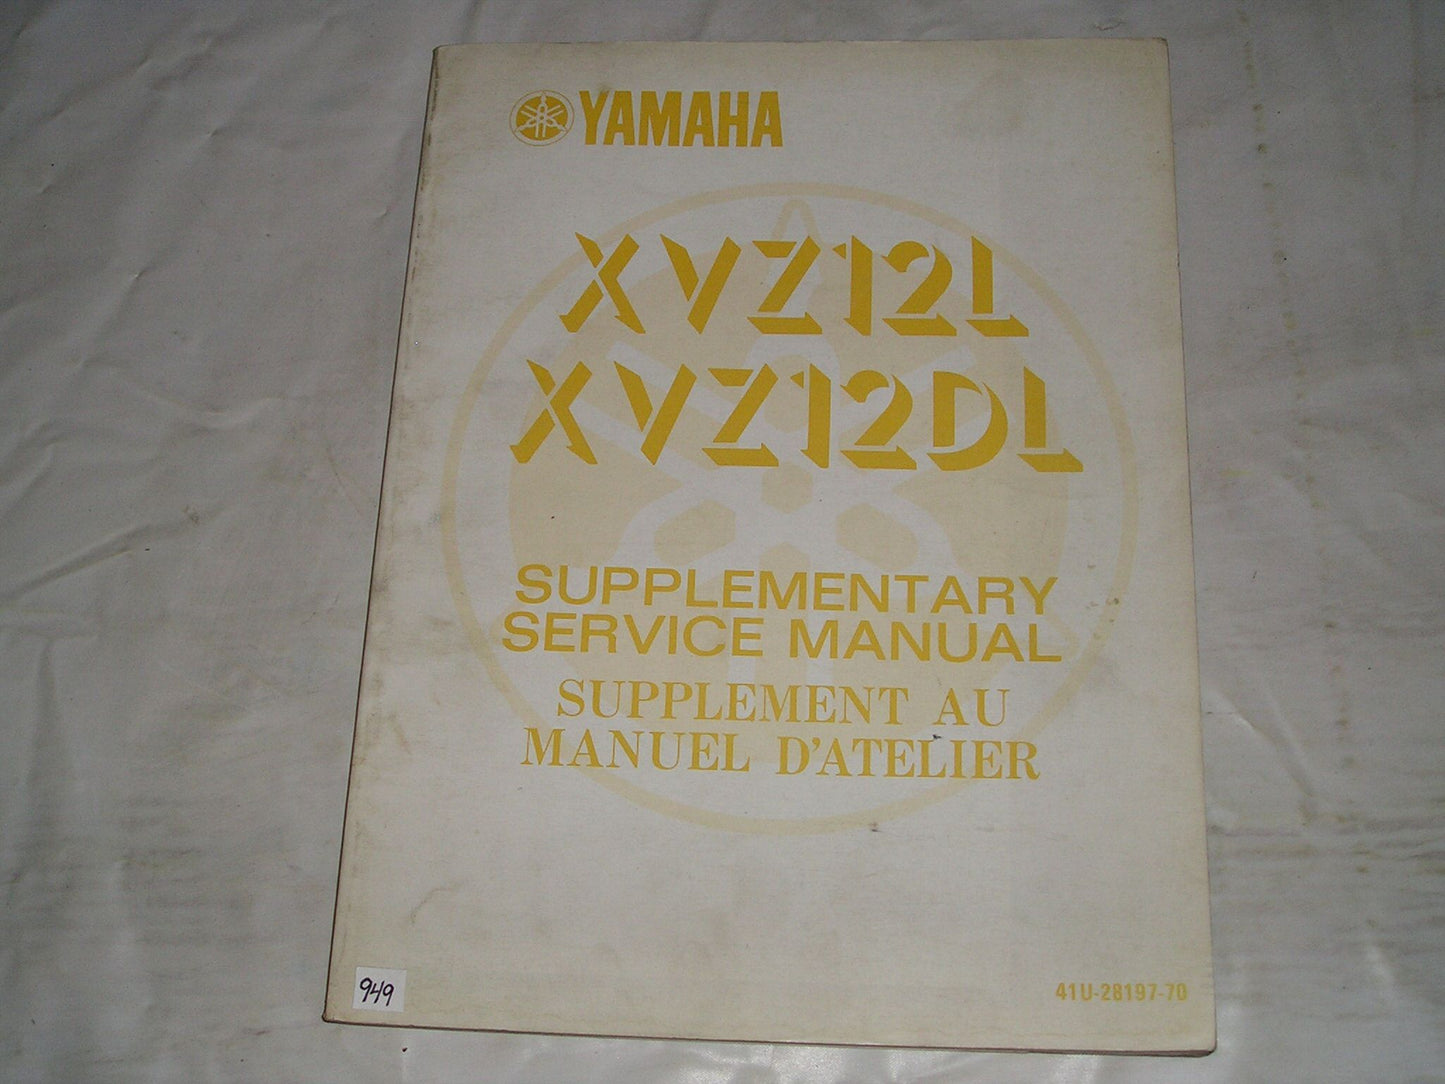 YAMAHA XVZ12L  XVZ12D L  1984  Service Manual Supplement  41U-28197-70   #949